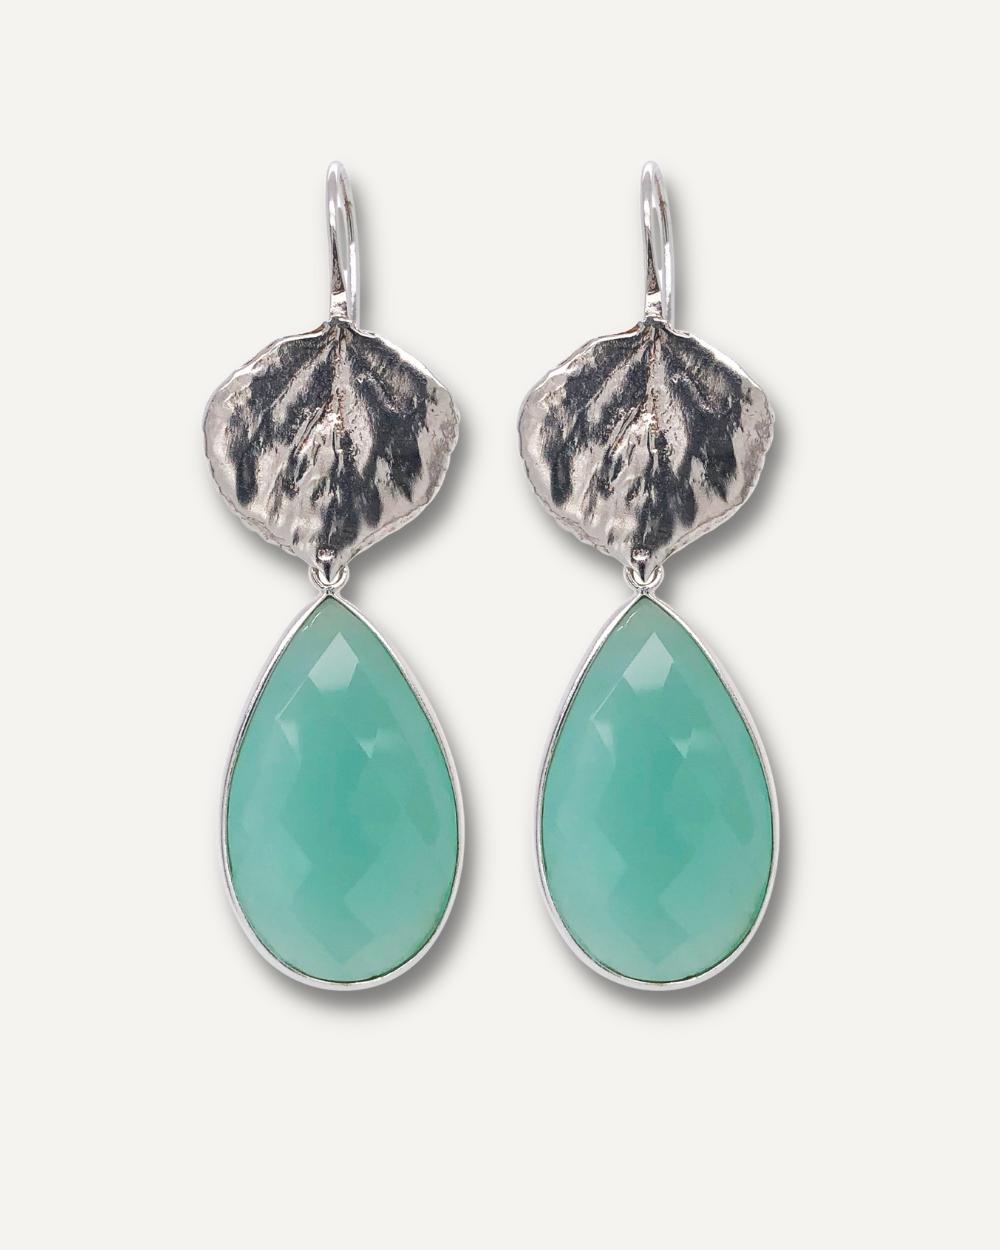 Aqua chalcedony gemstone drop earrings on cream background.